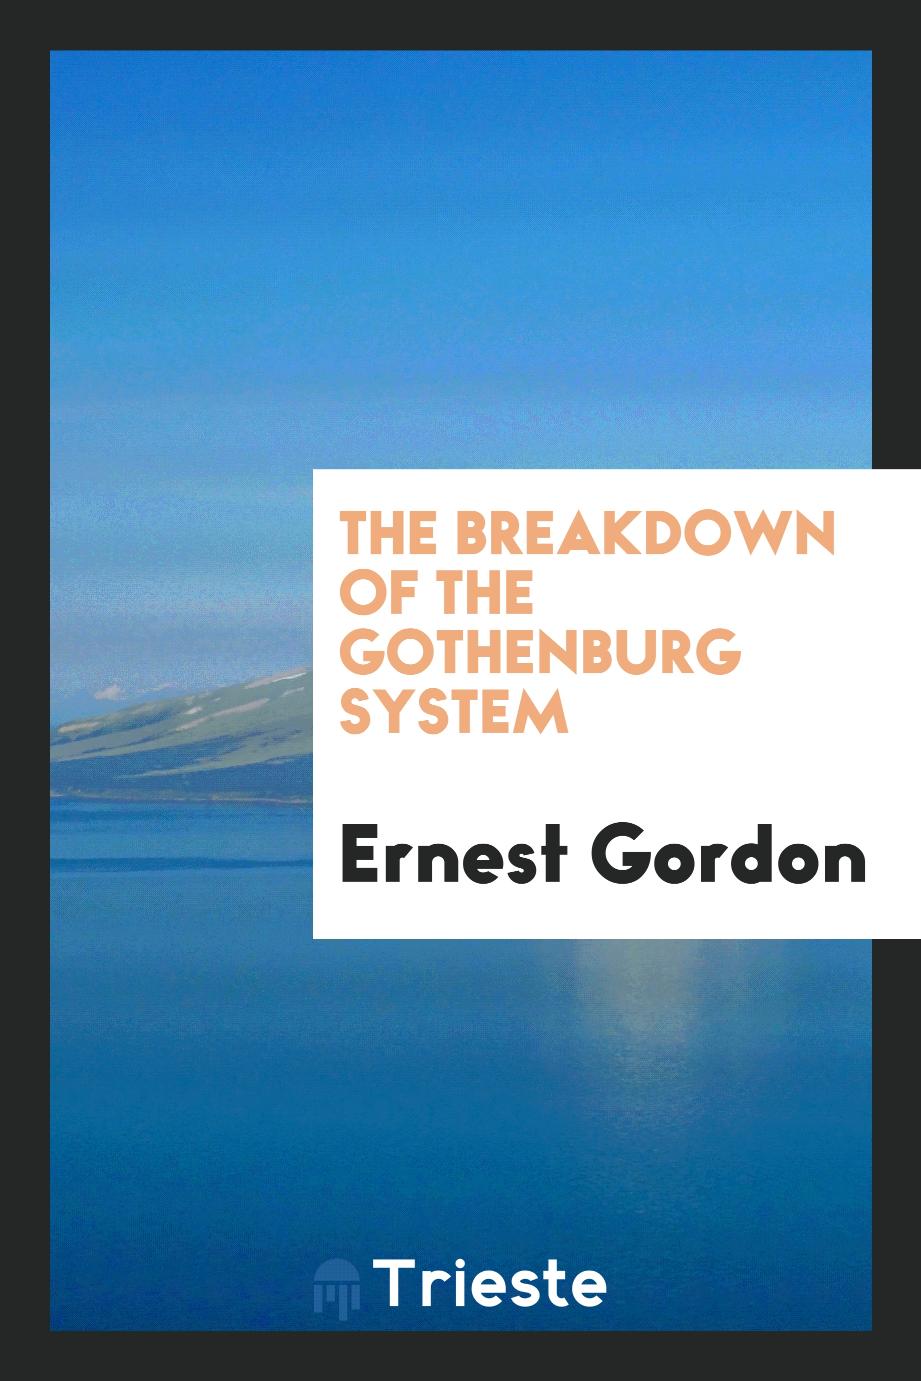 The breakdown of the Gothenburg system